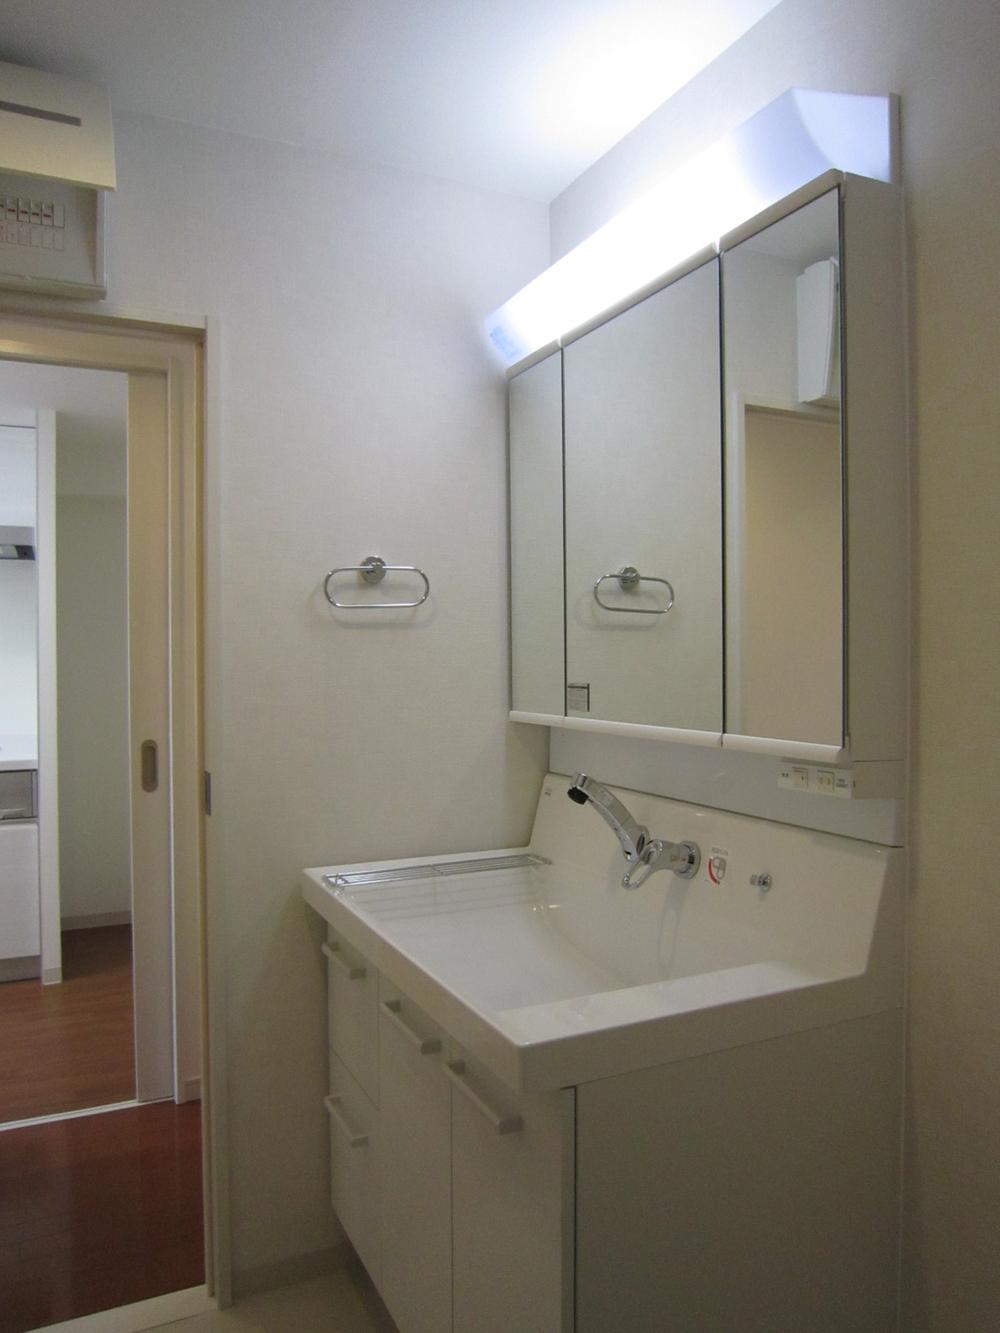 Wash basin, toilet. Room (May 2013) Shooting